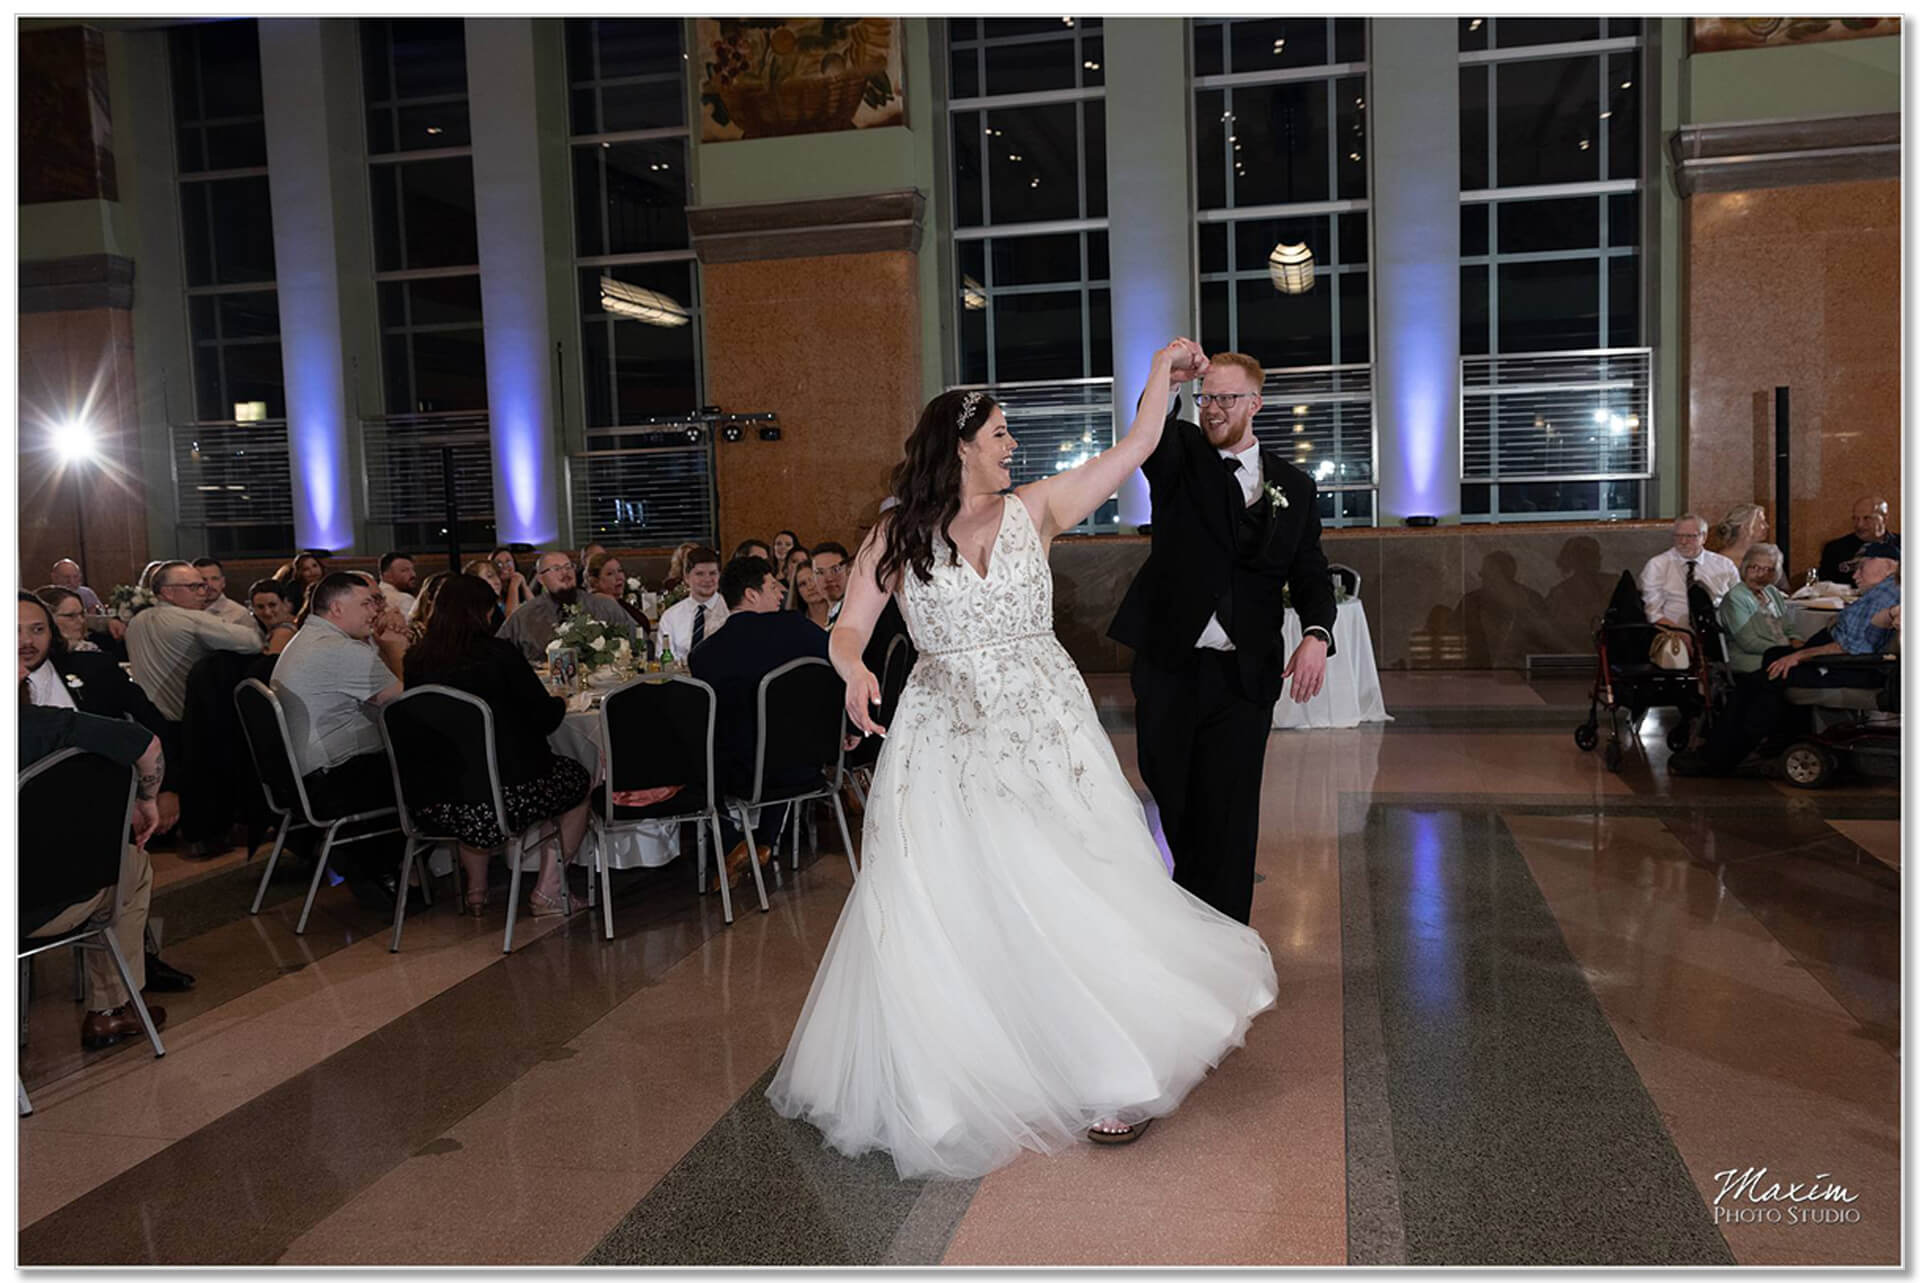 Cincinnati Museum Center Reception Wedding toasts first dance